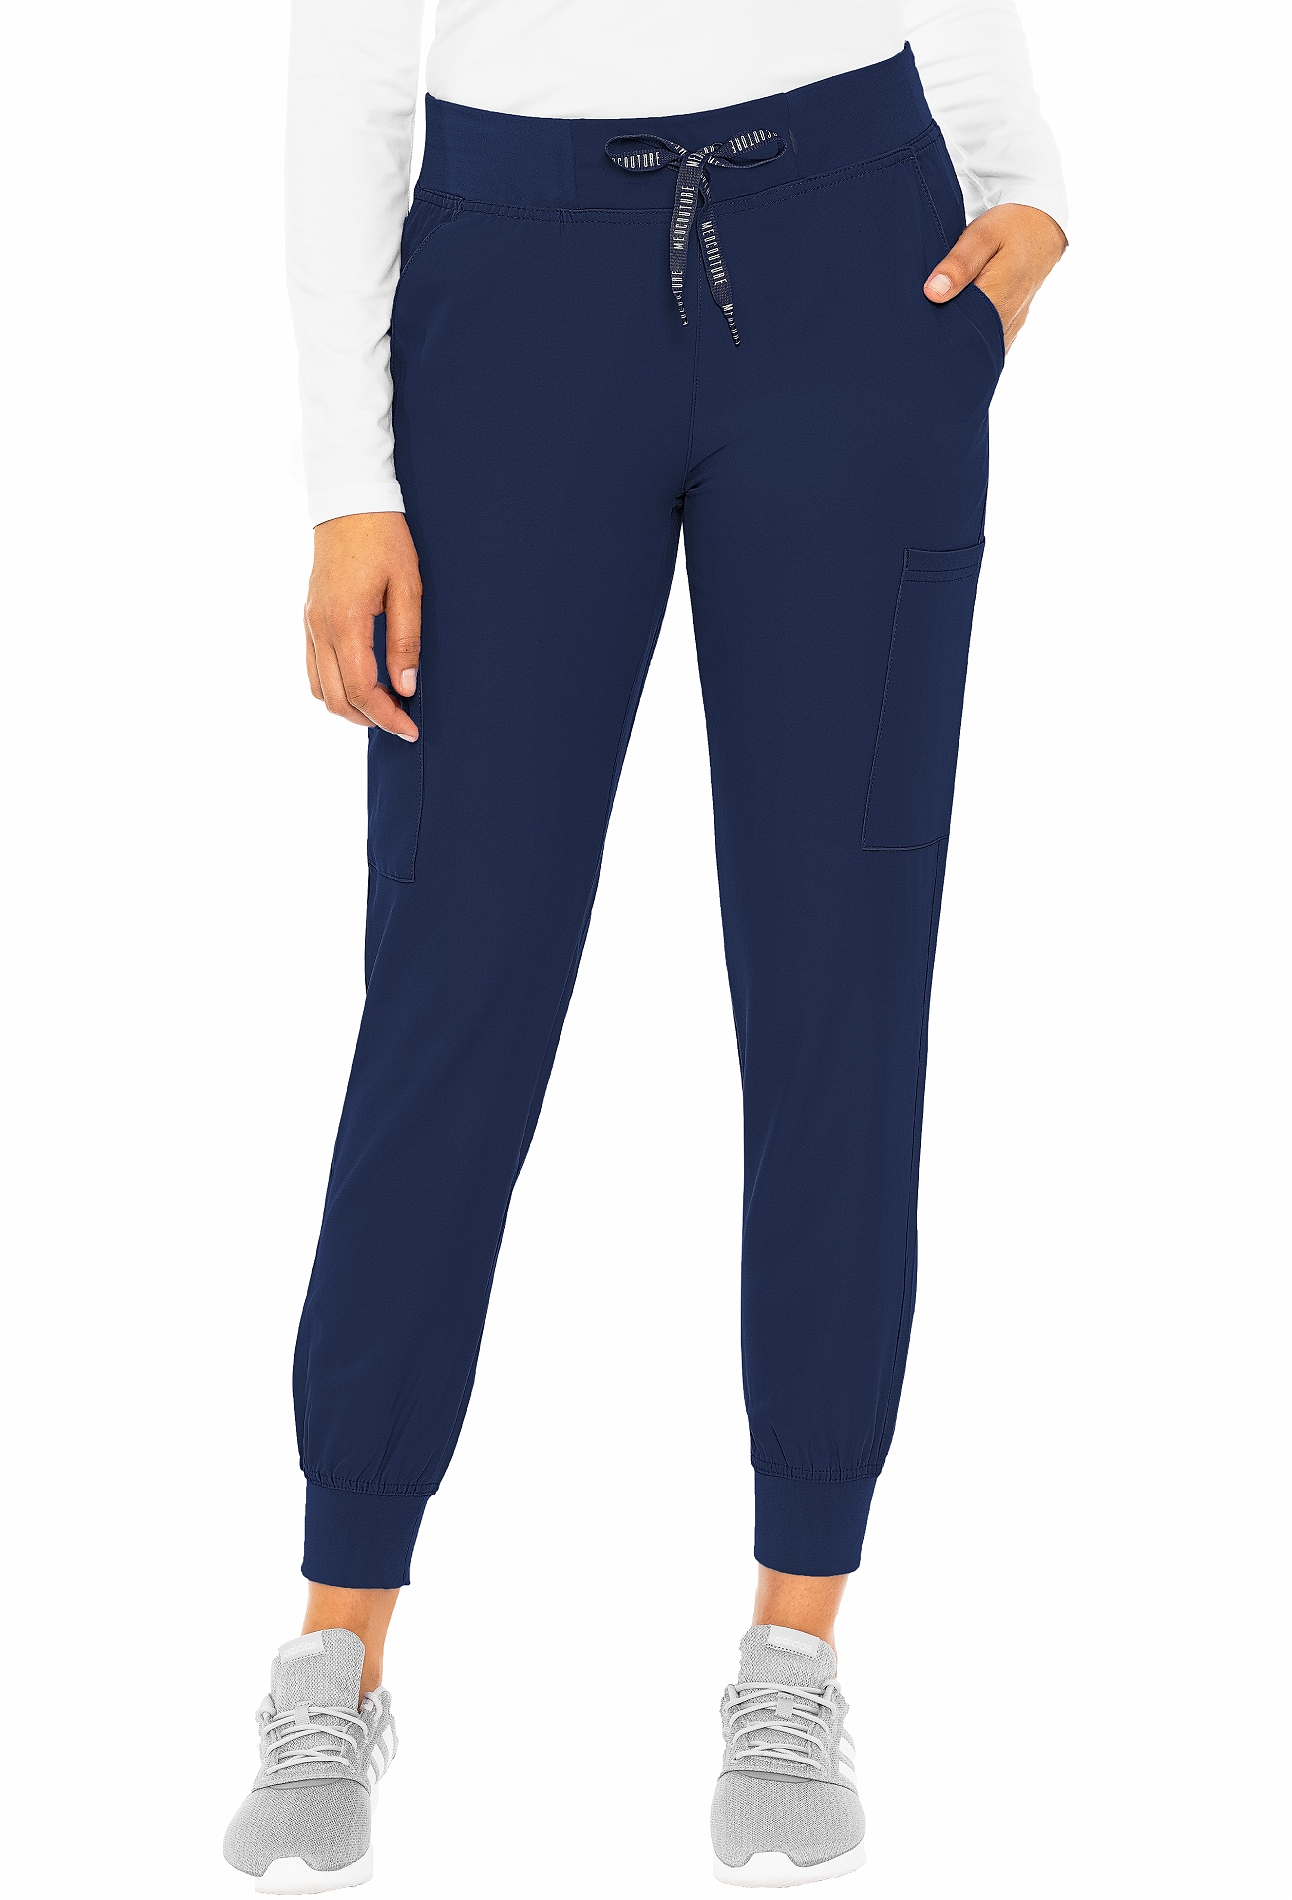 Med Couture Insight Women's Jogger Scrub Pants-MC2711 (Navy - Medium Petite)